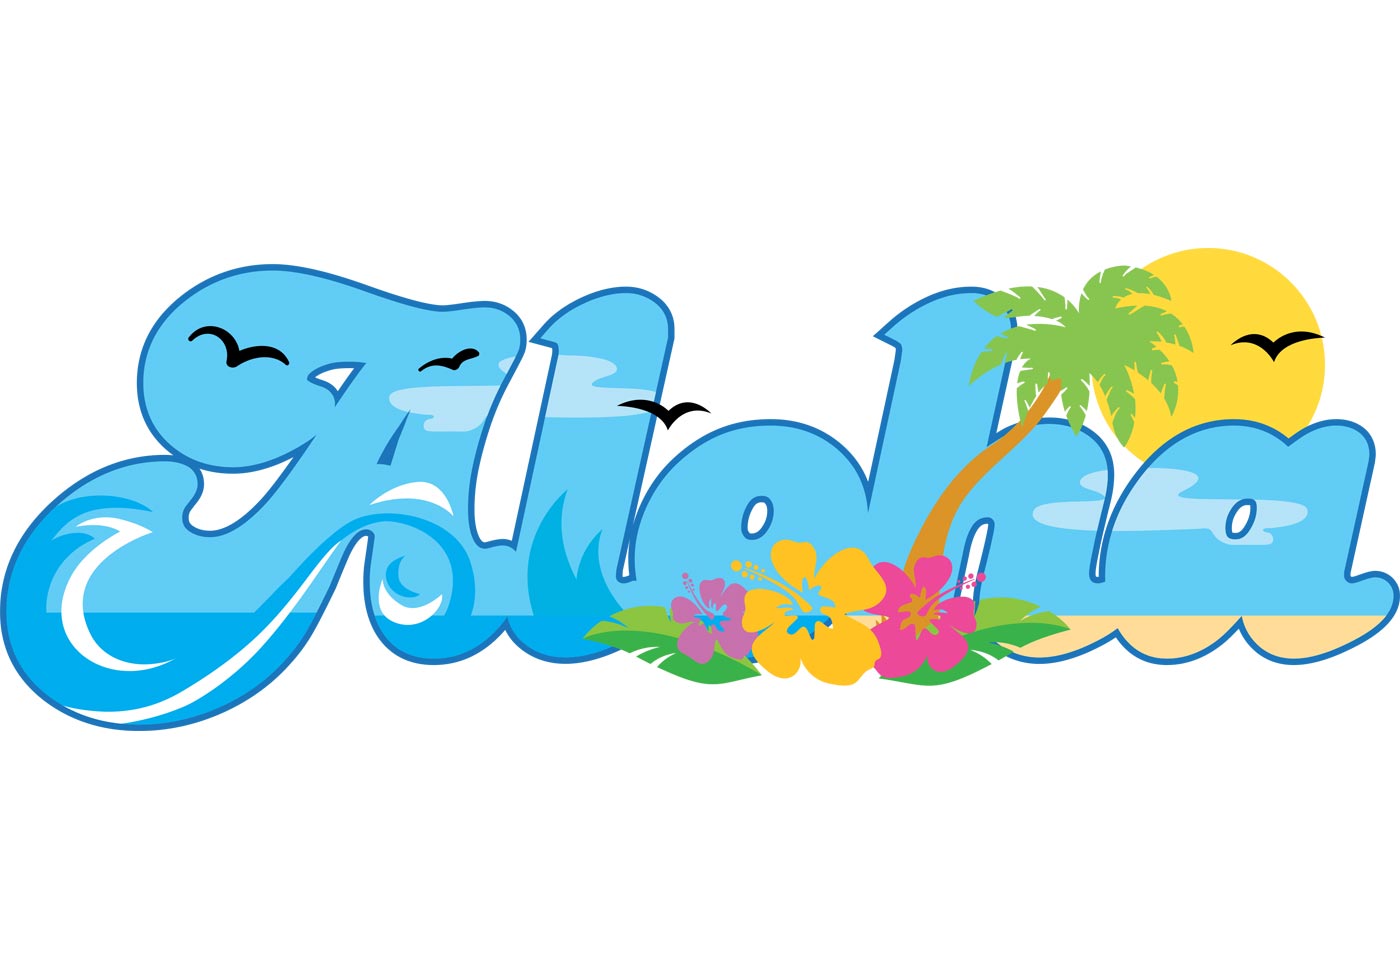 Download Aloha Hawaii Vector | Free Vector Art at Vecteezy!